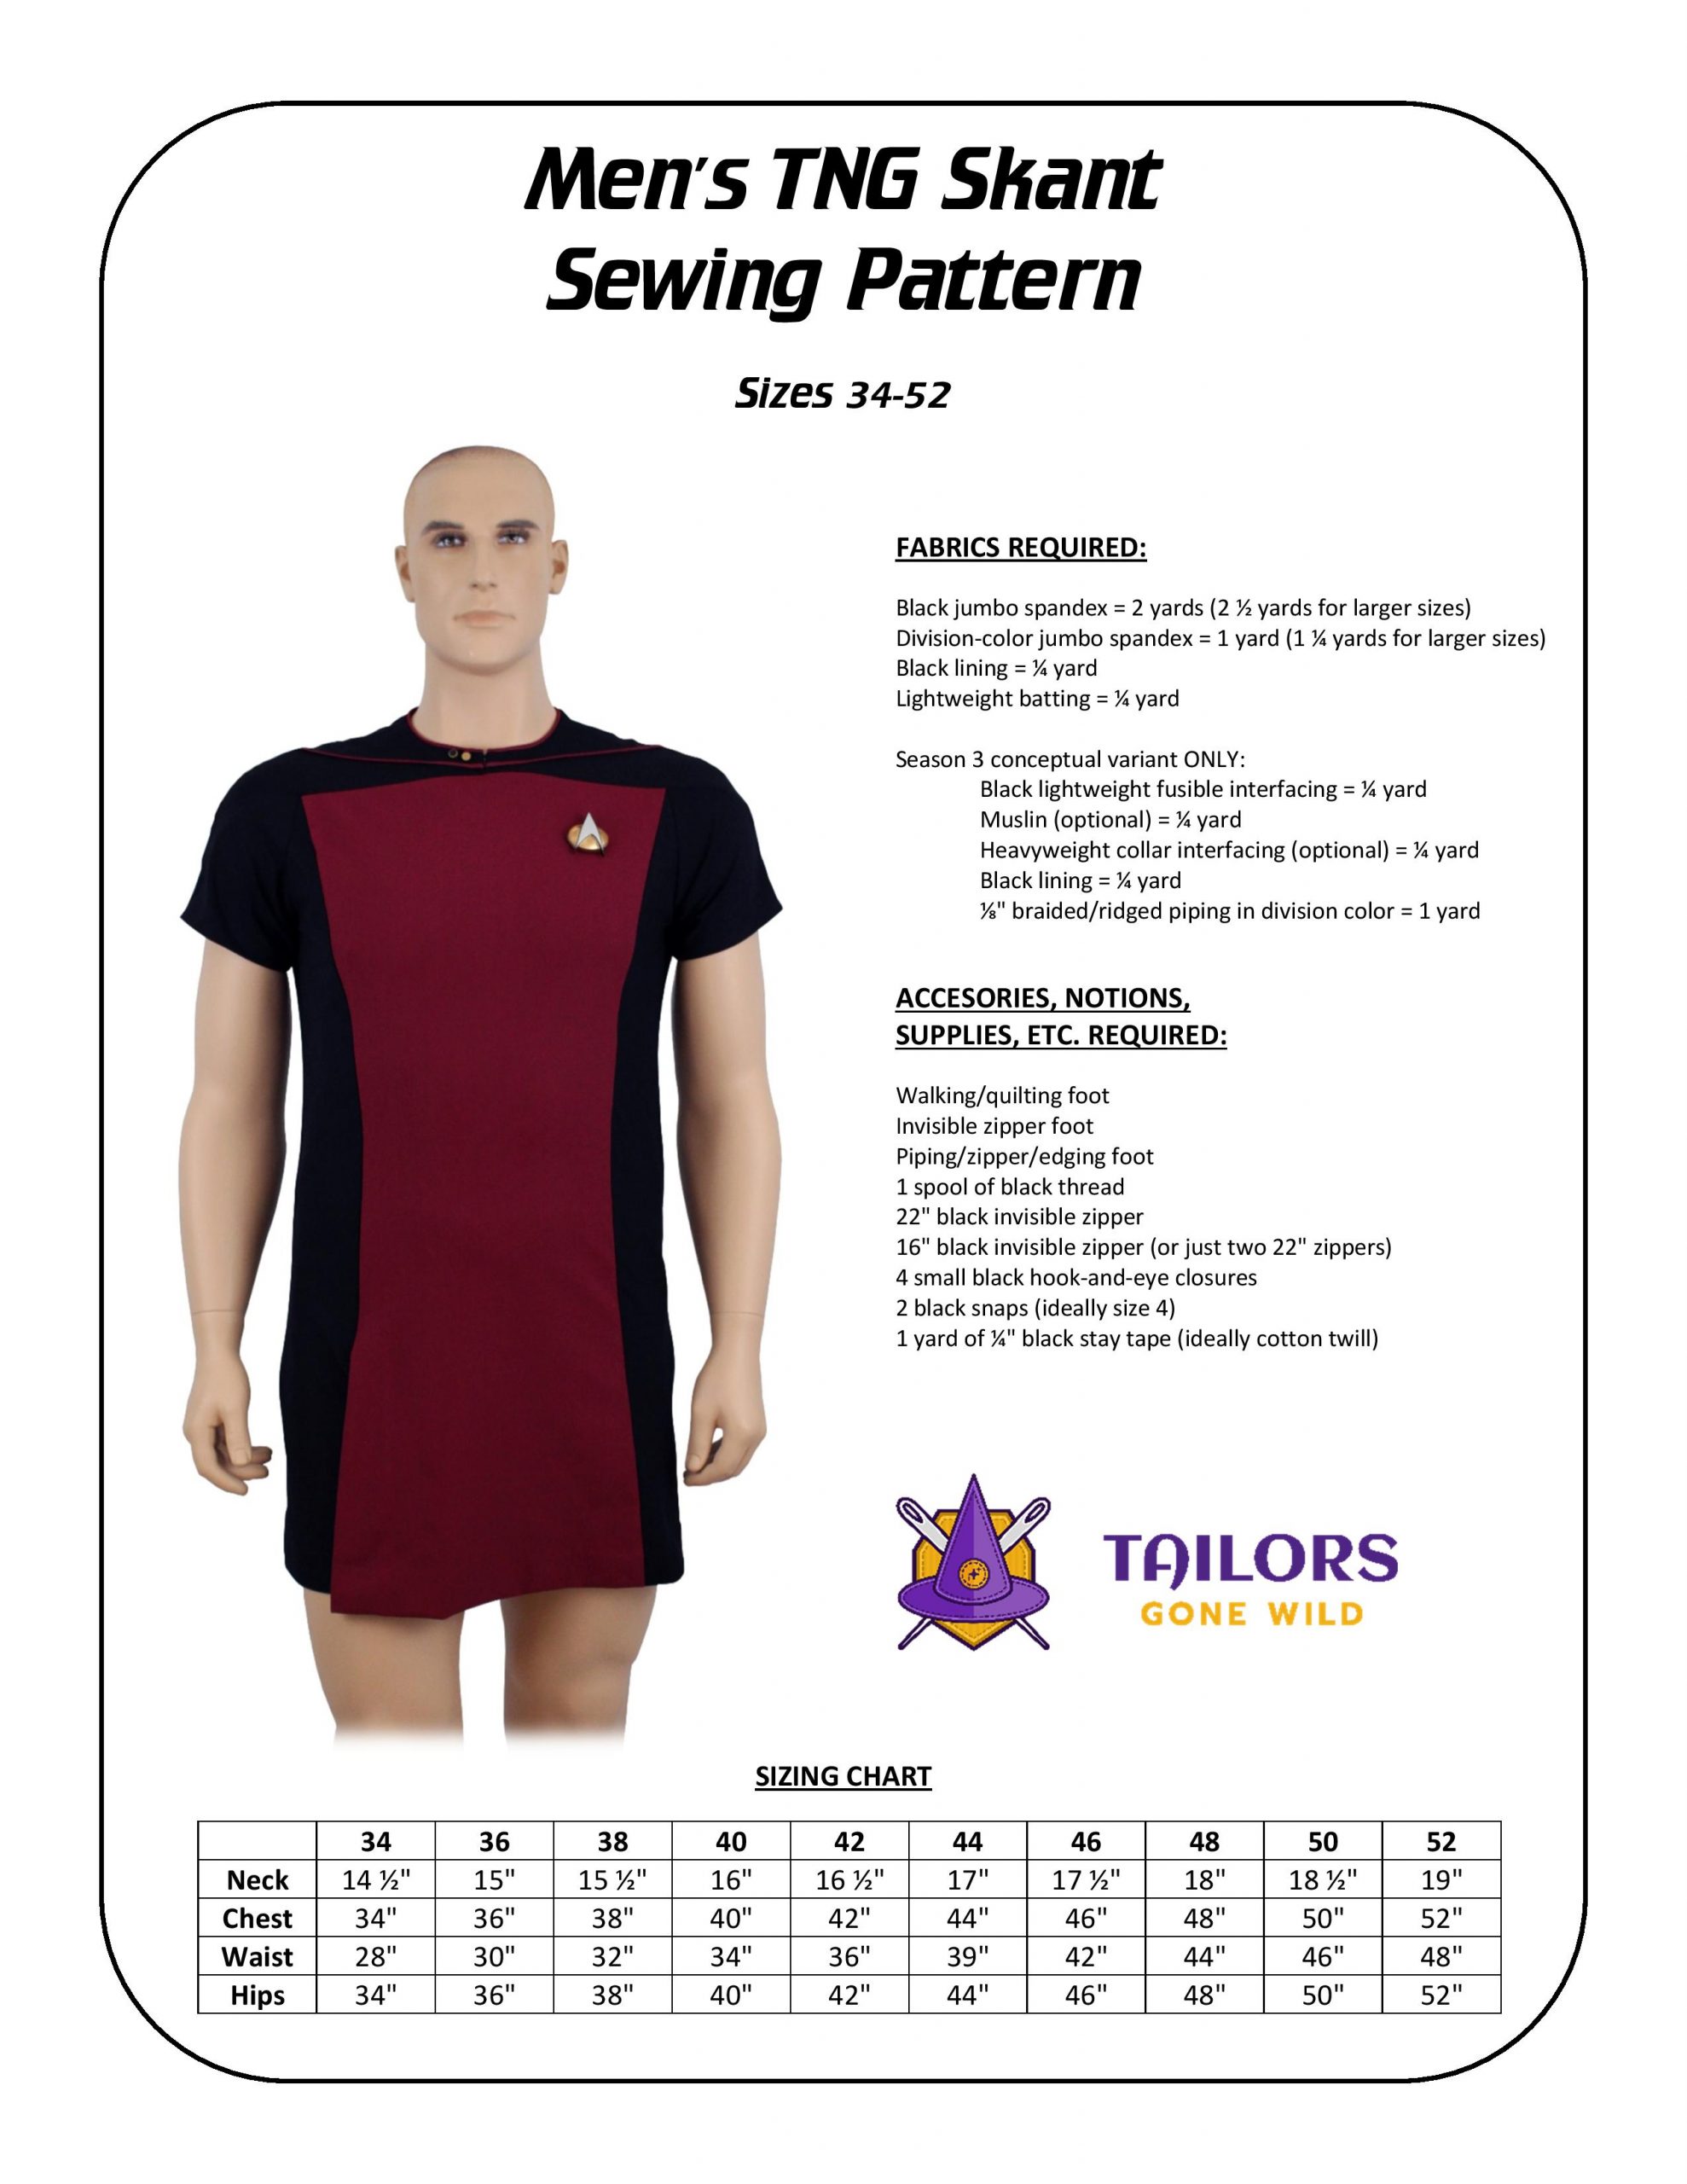 Men's TNG skant sewing pattern - Tailors Gone Wild